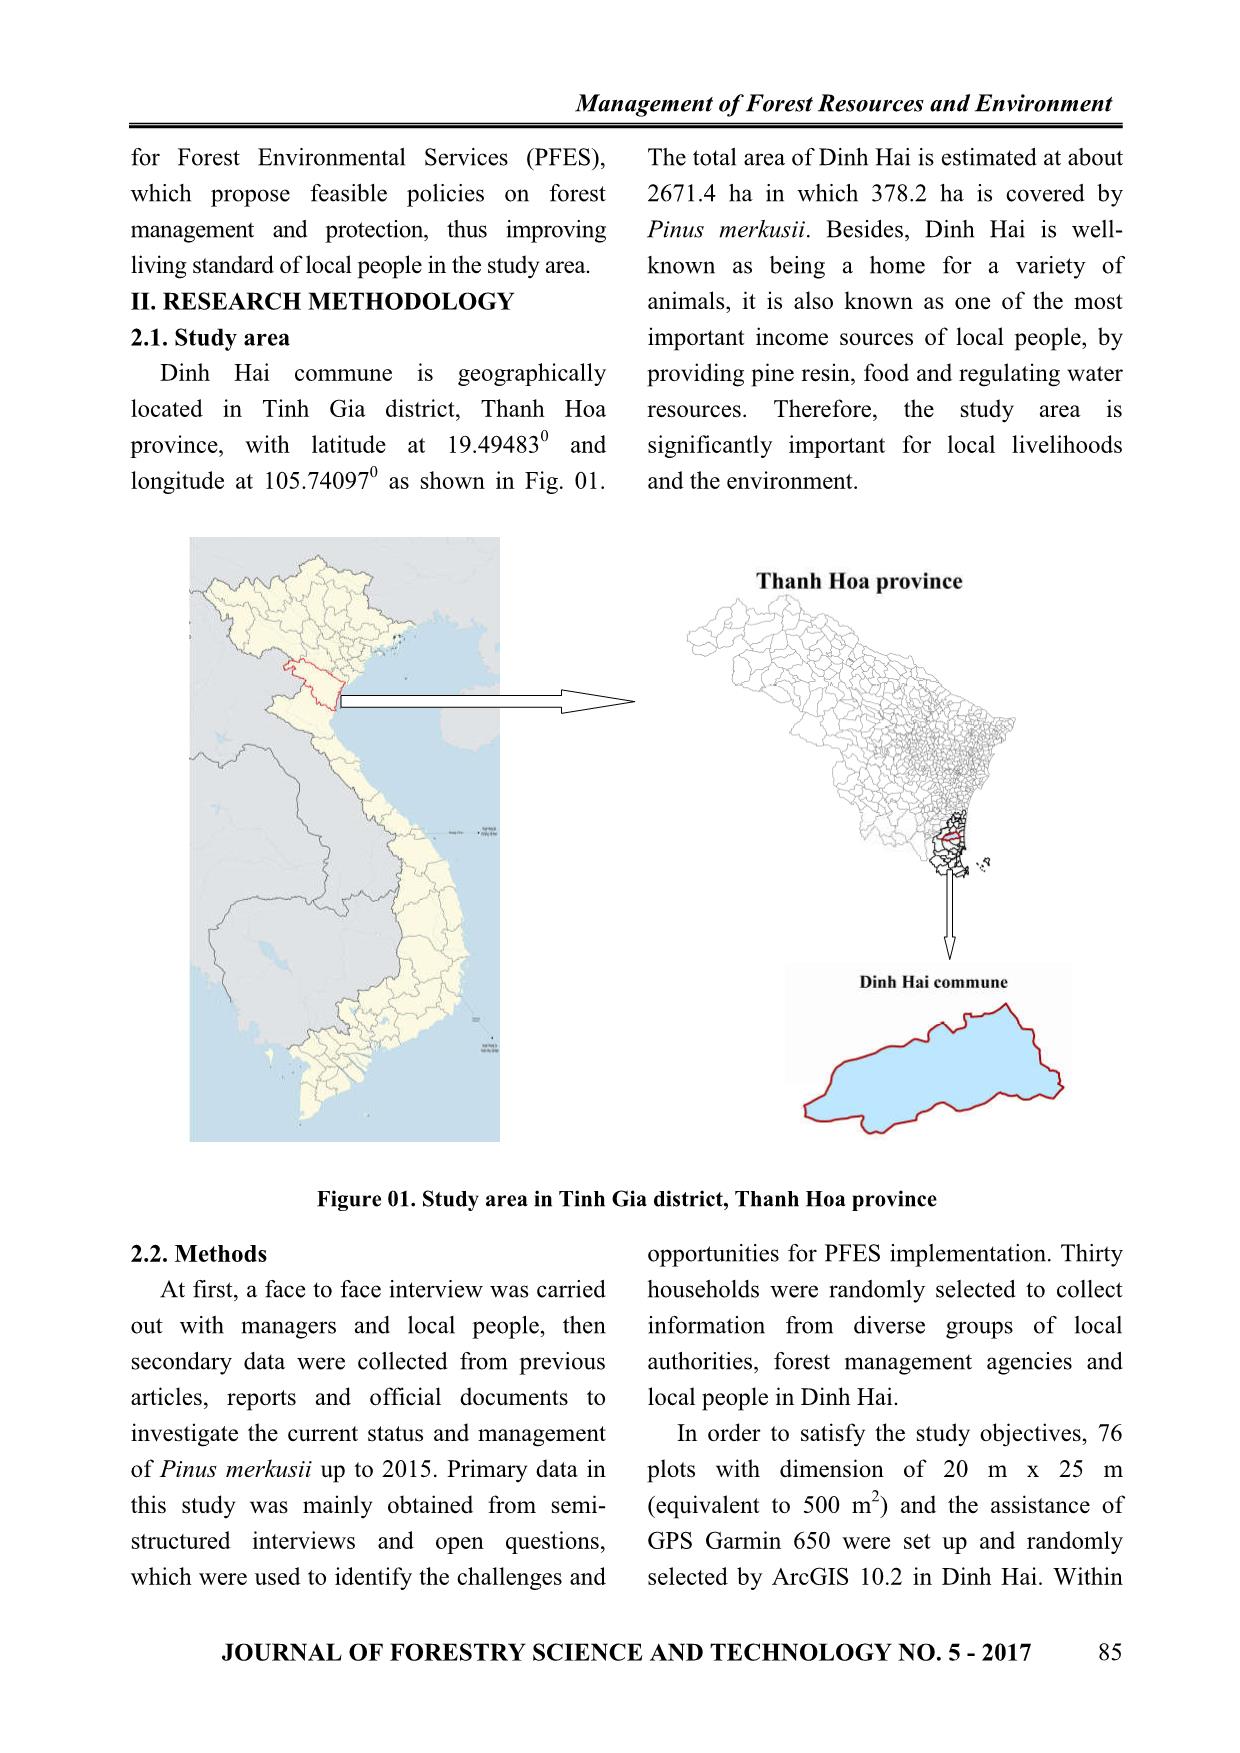 Using spot 6 to estimate biomass and carbon stocks of pinus merkusii plantation in Dinh Hai commune, Thanh Hoa province trang 2